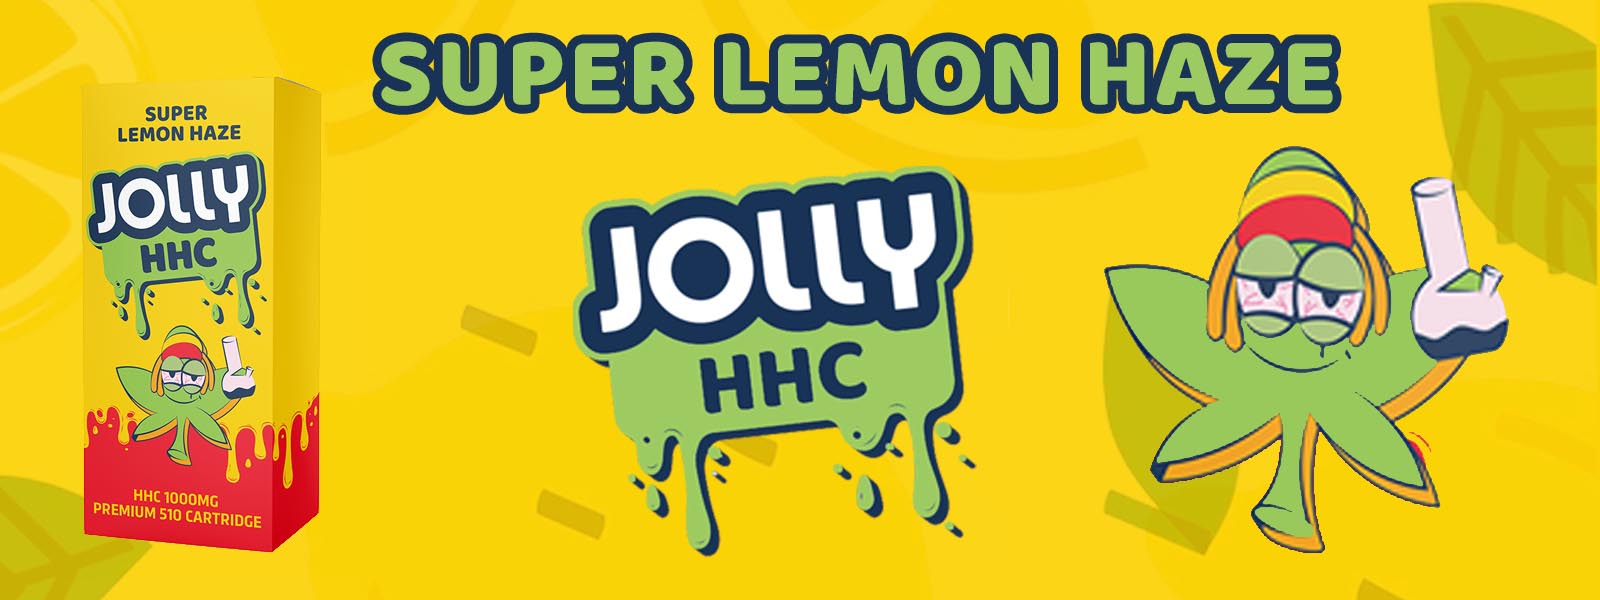 JOLLY HHC Super Lemon Haze Cartridge